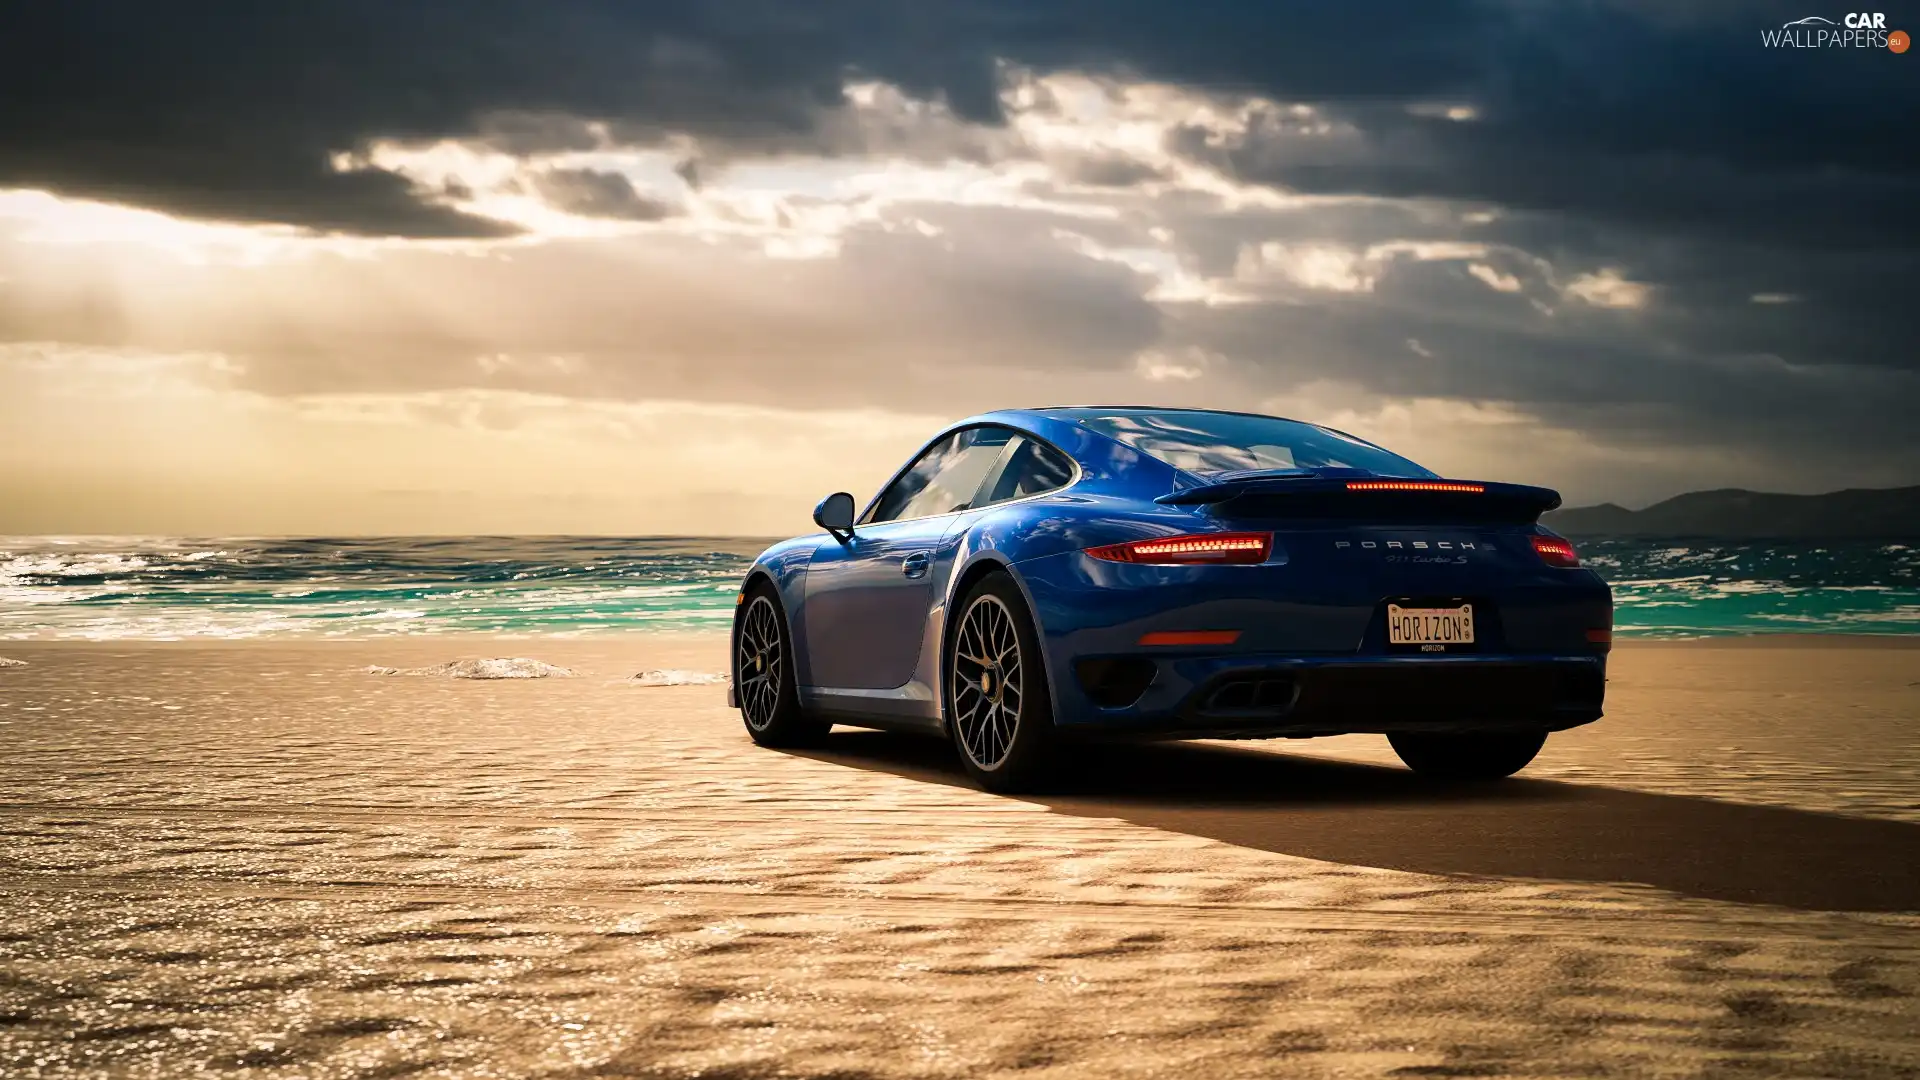 Back, Blue, Porsche 911 Turbo S